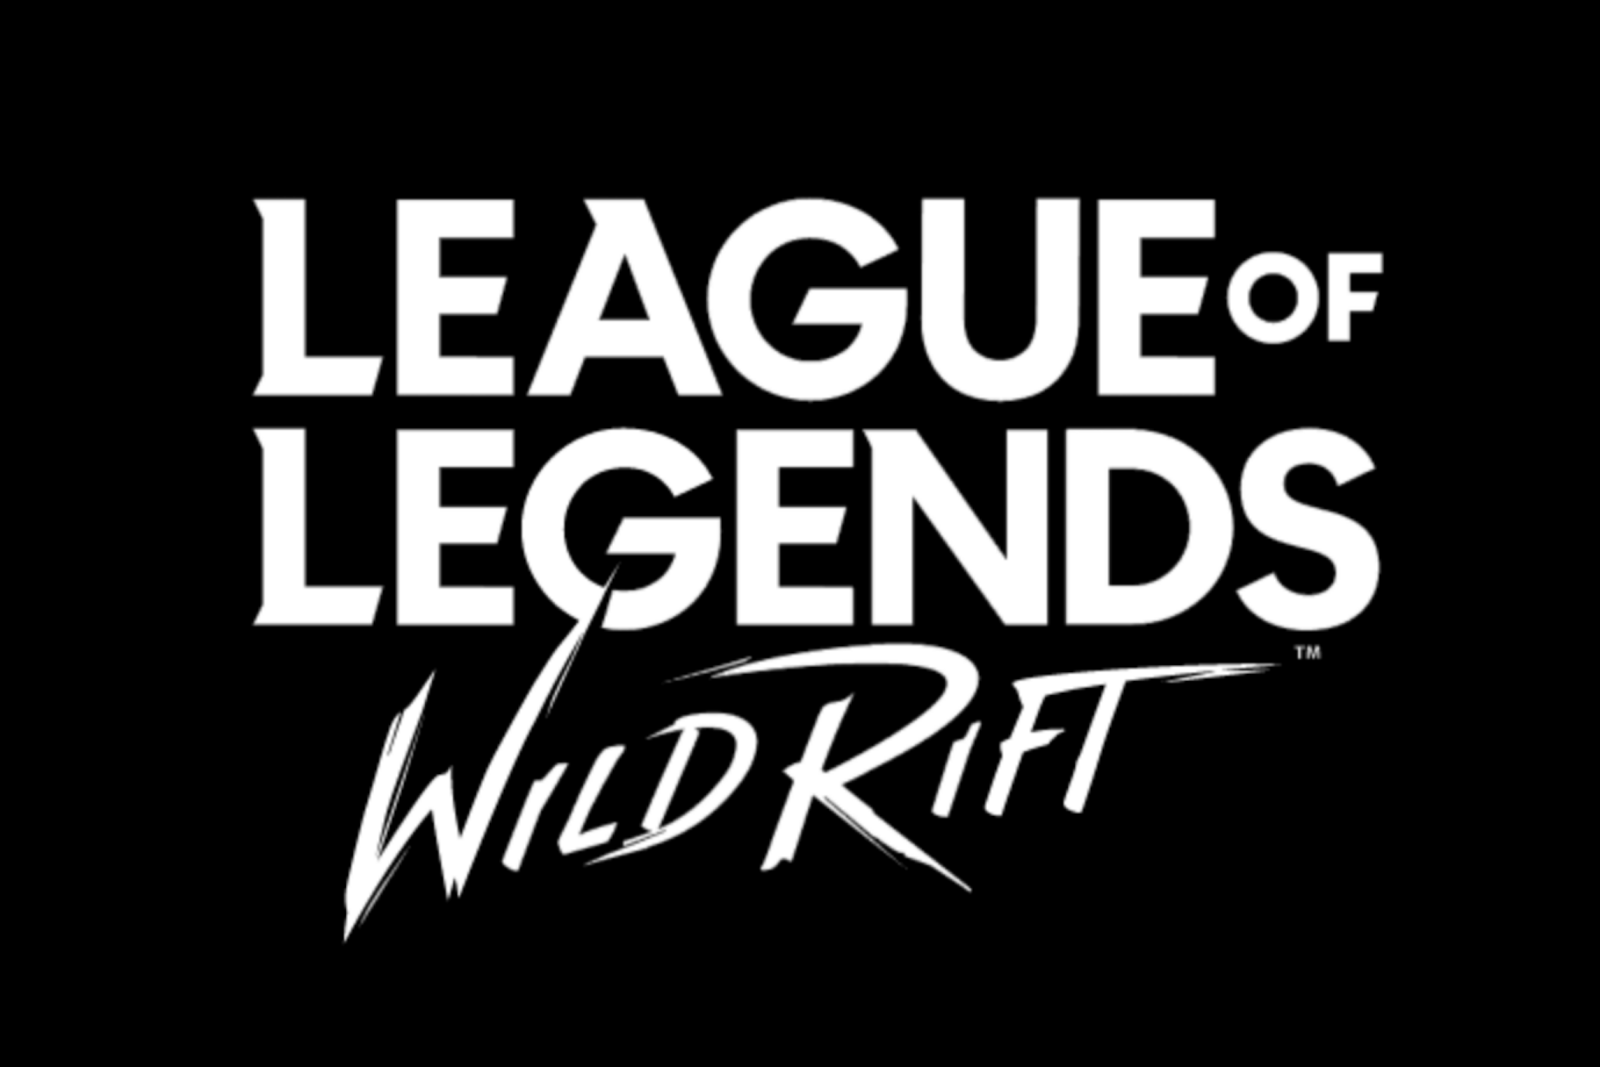 China Sensor Art Champs League of Legends Wild Rift Untuk Champs Dengan Visual Seksi